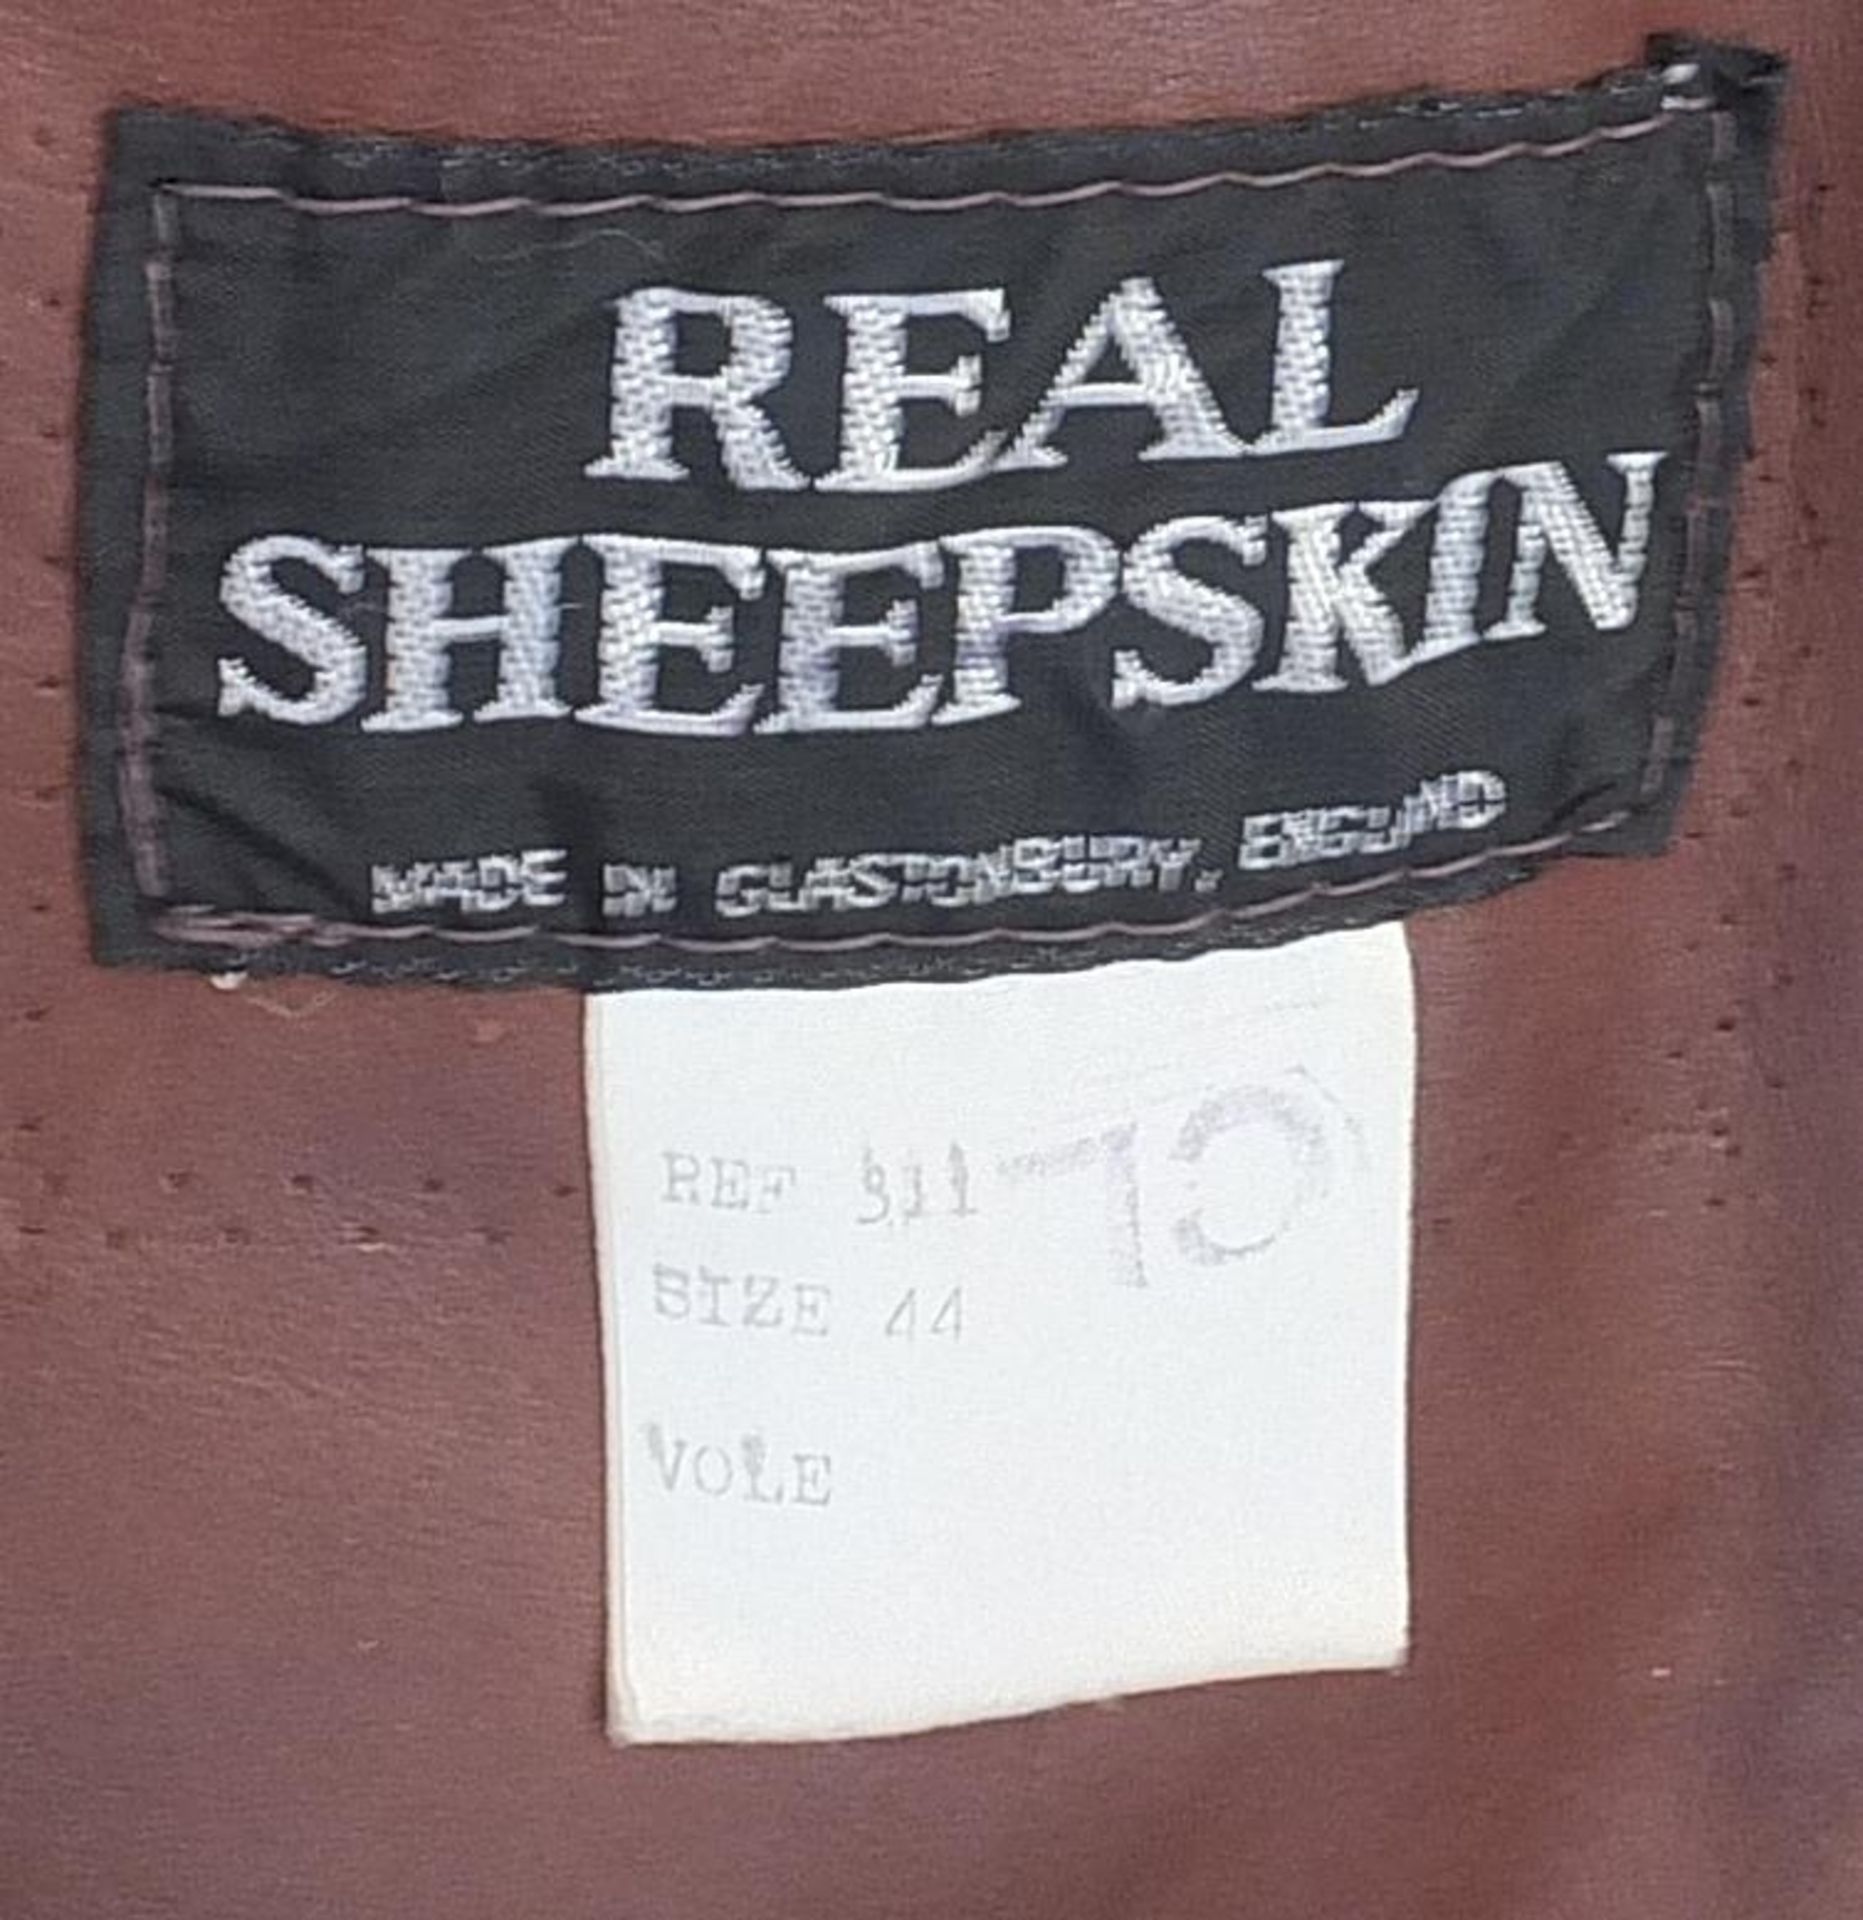 Real sheepskin ladies coat, size 14/16 - Image 3 of 3